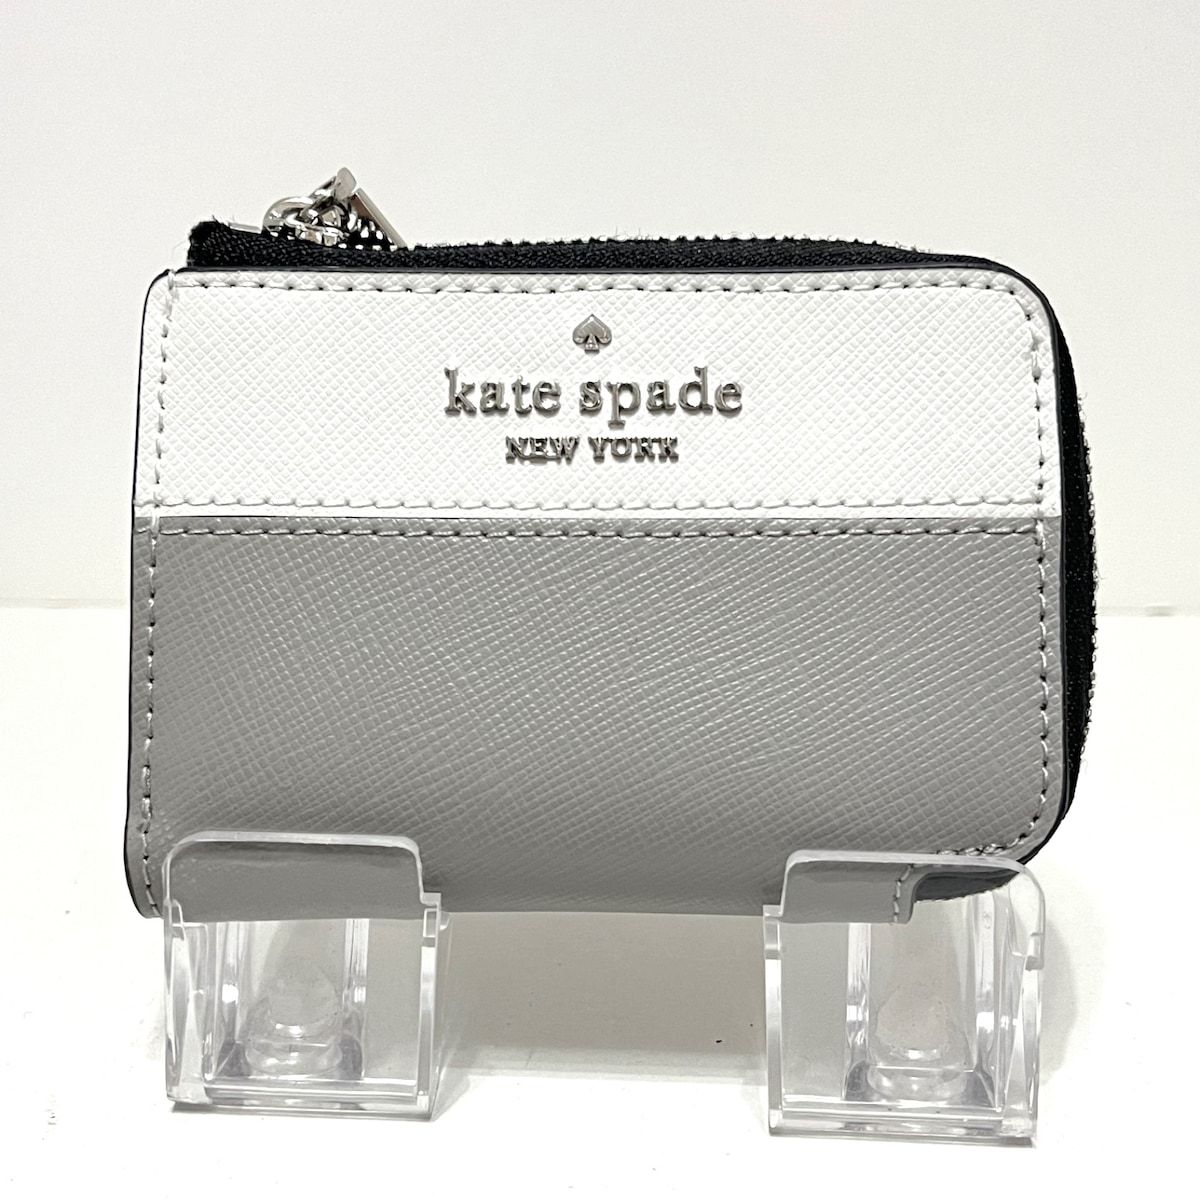 Kate spade(ケイトスペード) キーケース美品 - グレー×白 6連フック/L 